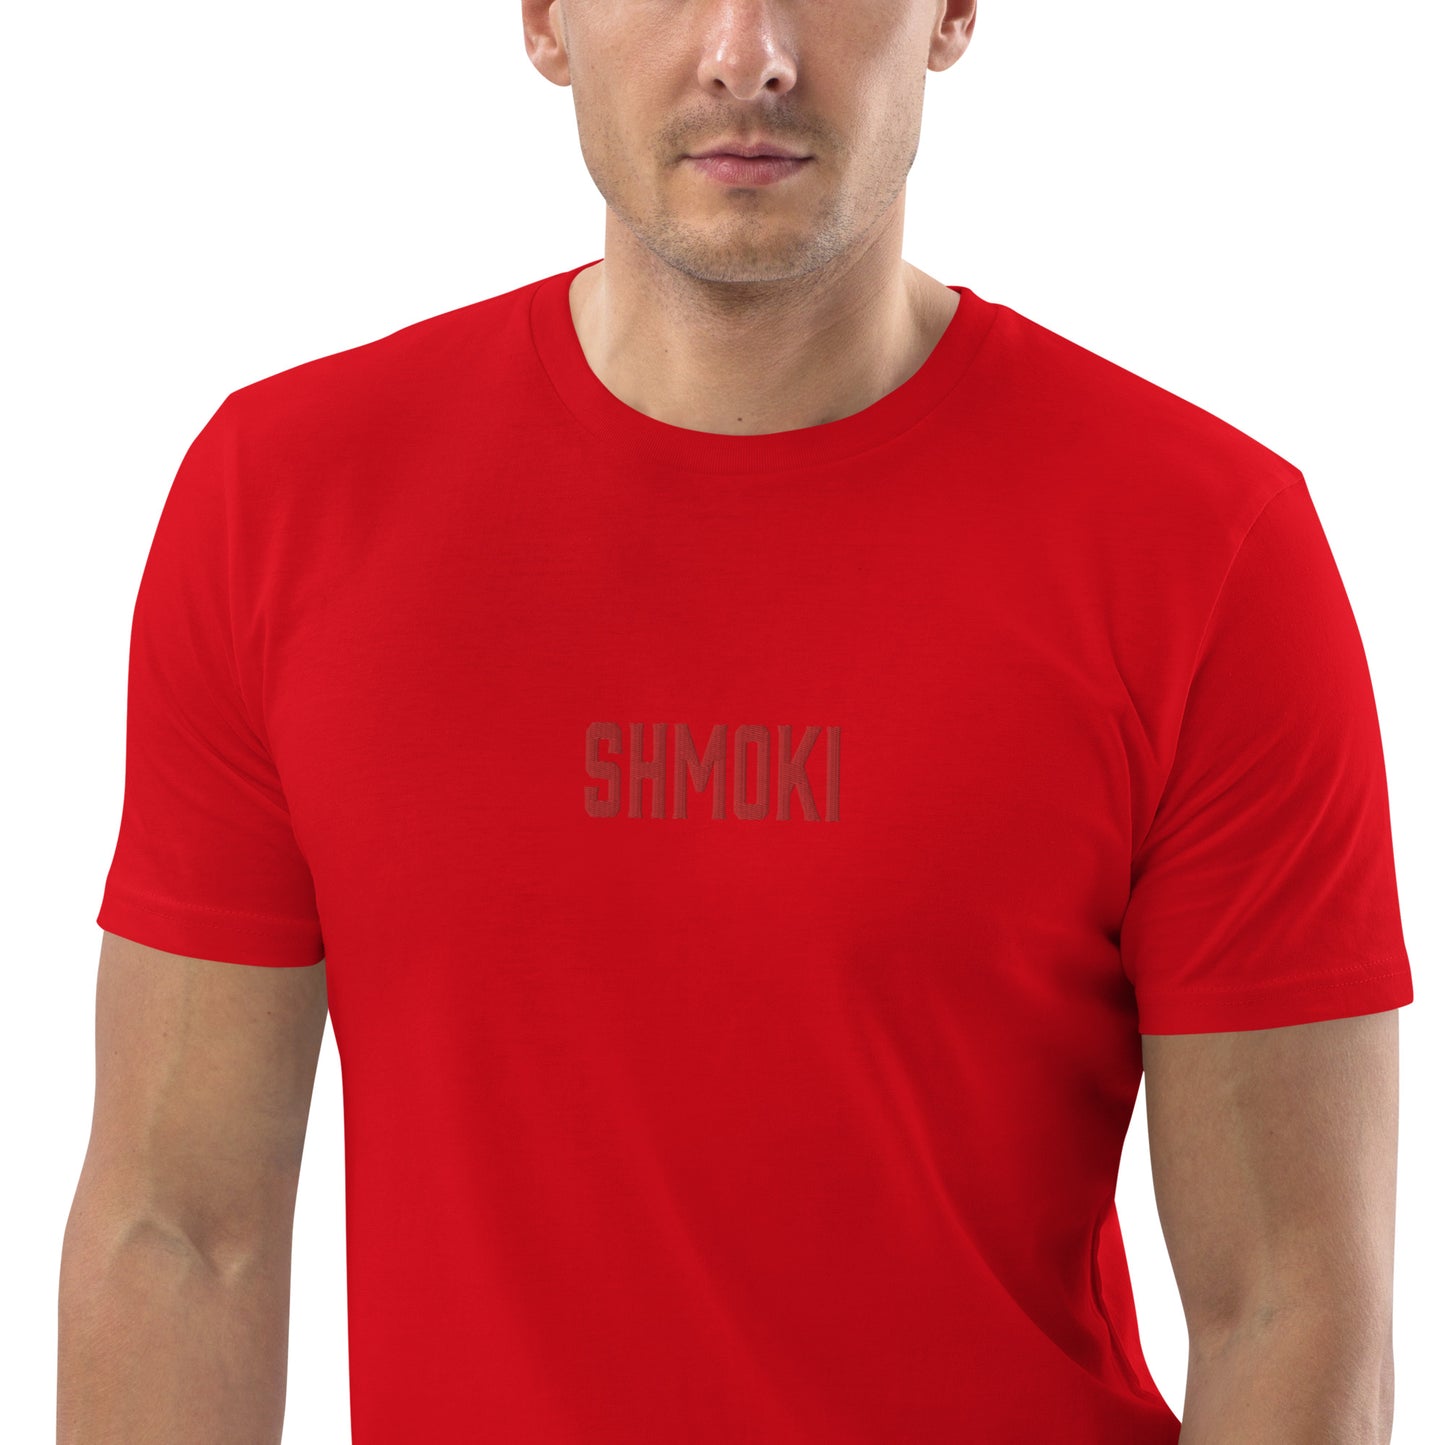 Shmoki T-shirt